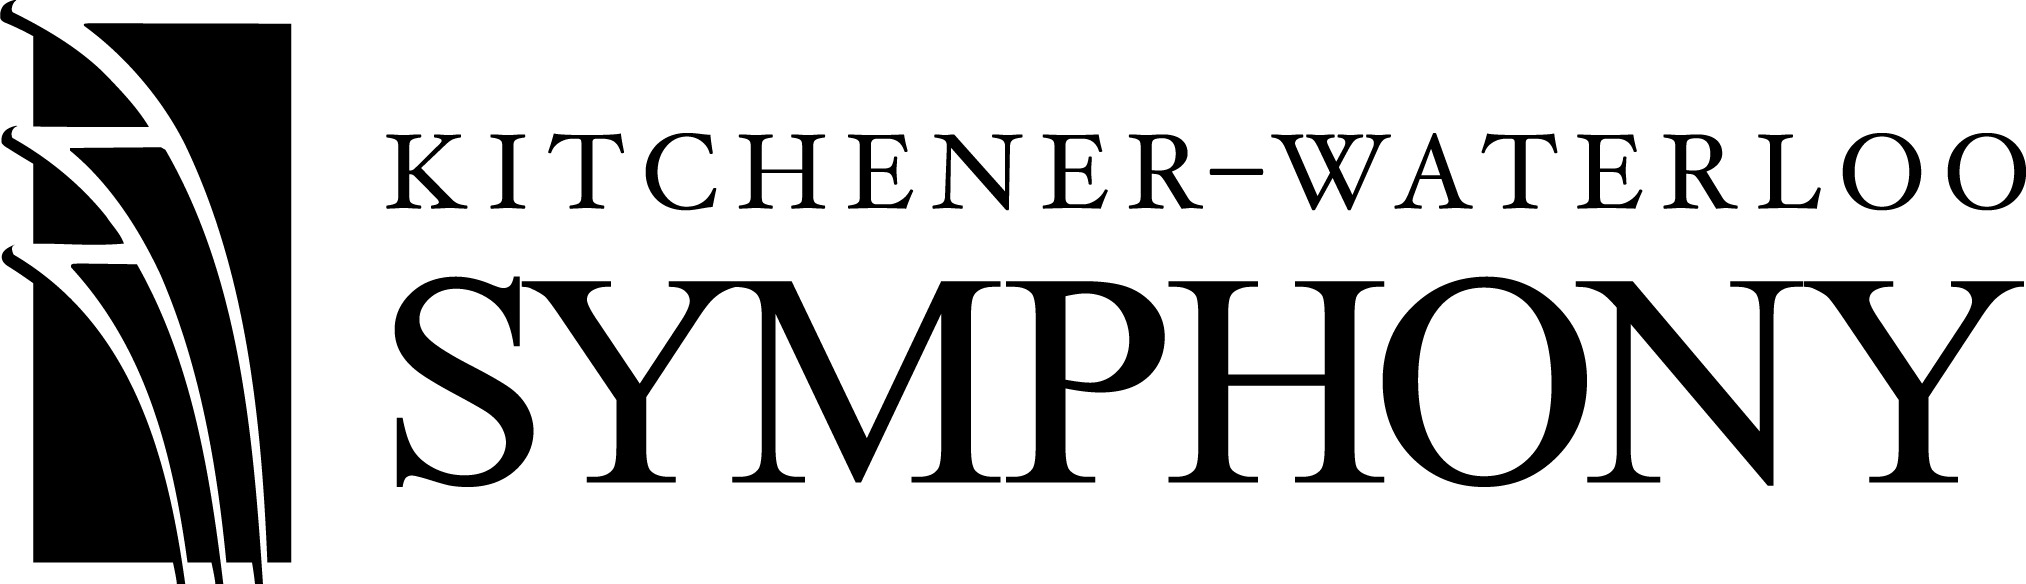 Kitchener-Waterloo Symphony logo